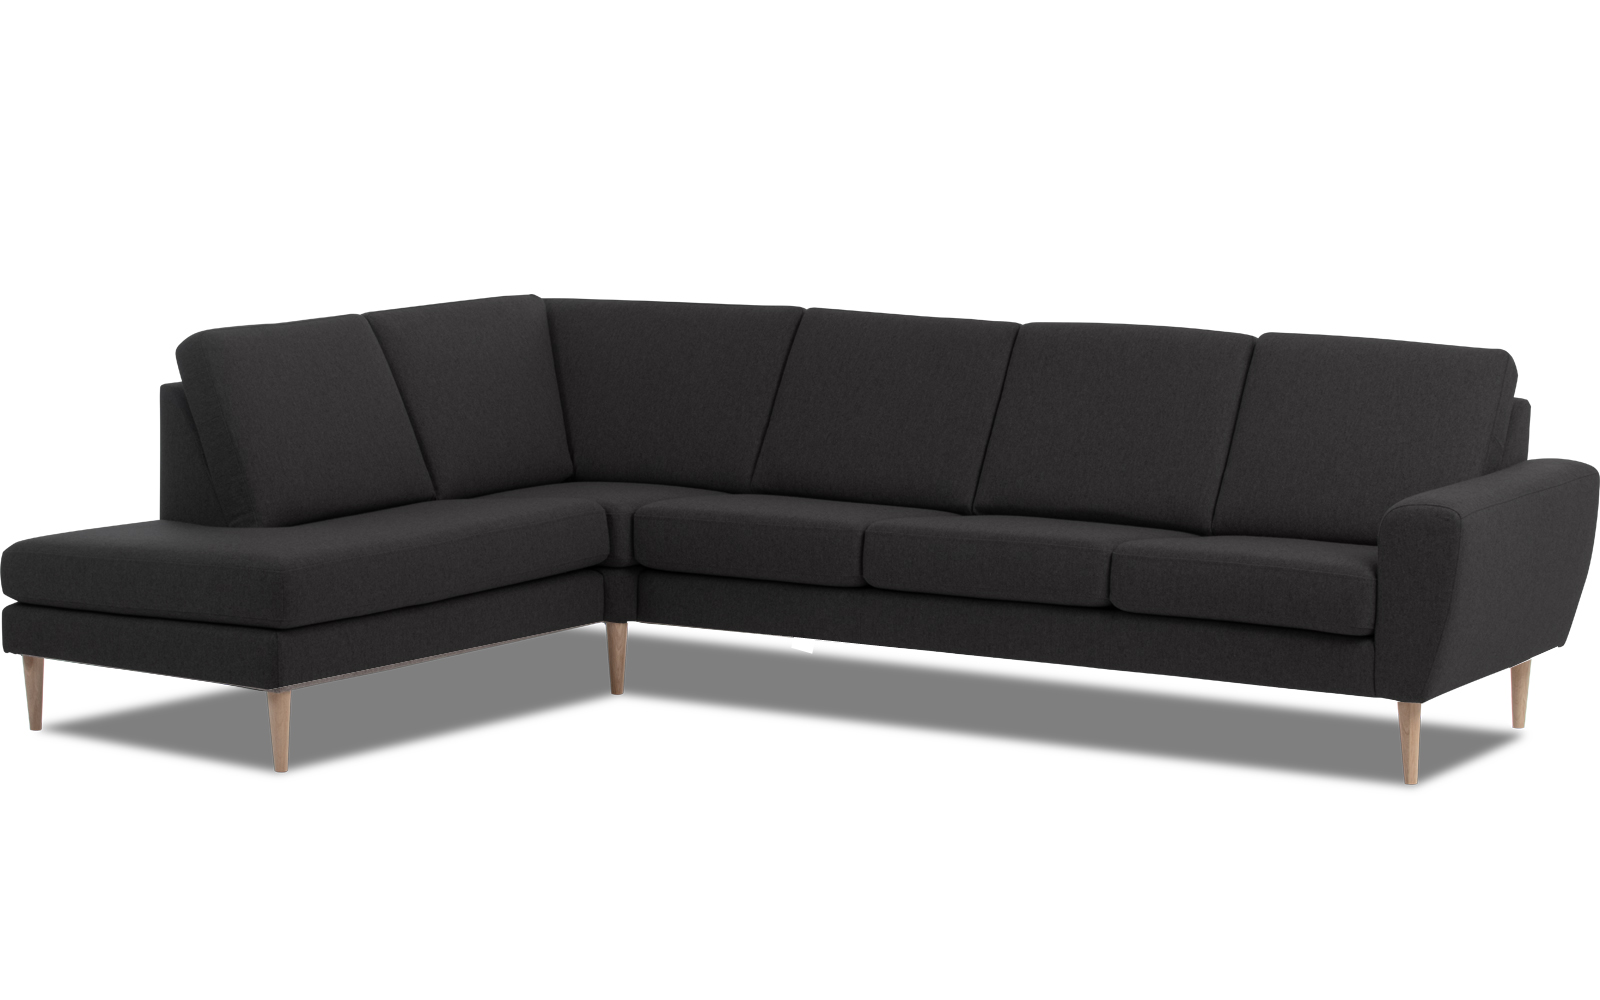 Køb Galaxy sofa med open end